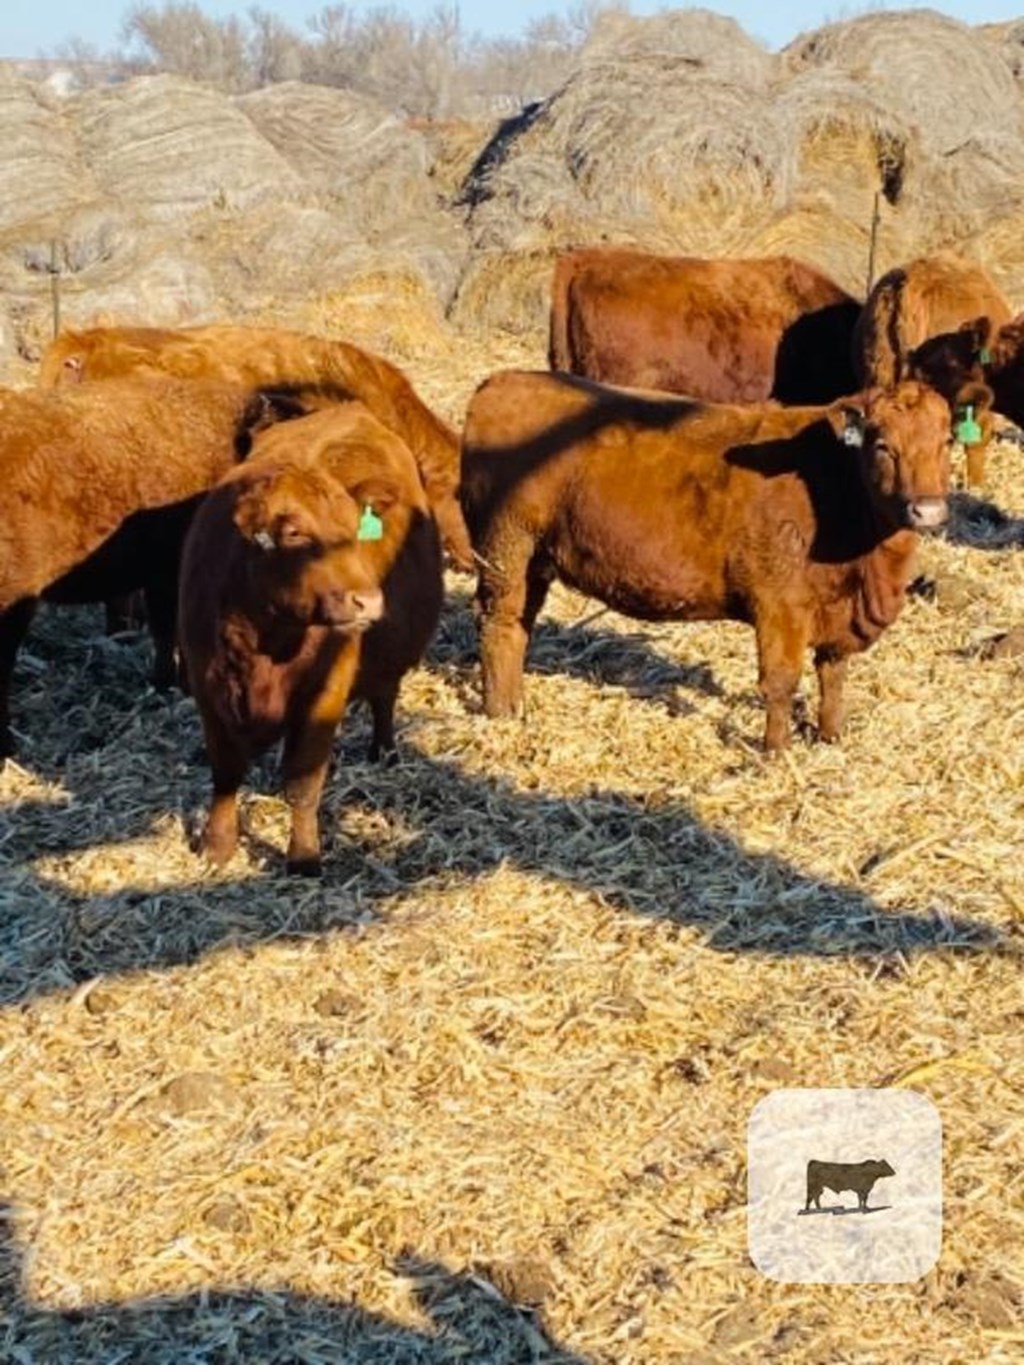 Cattle Range Listing Photo 3